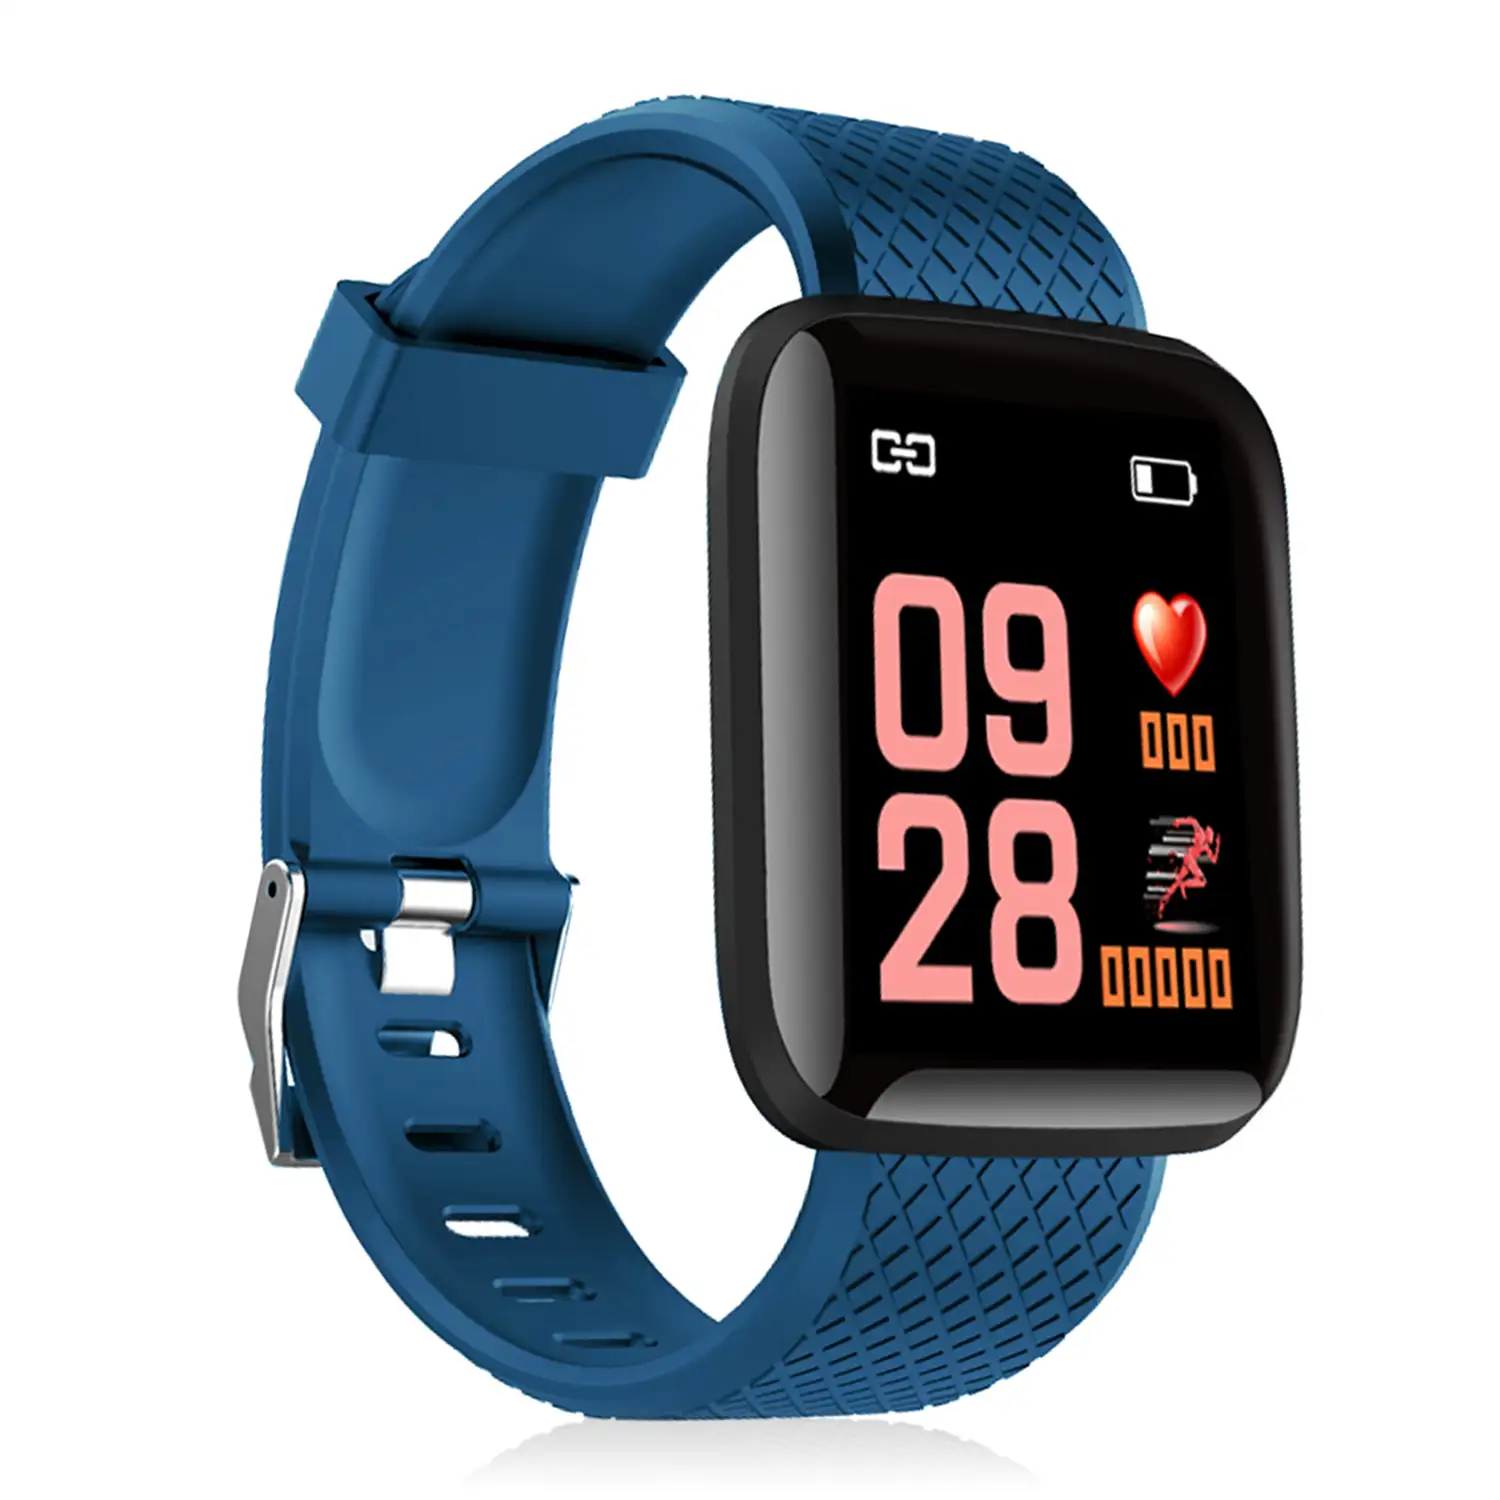 Brazalete inteligente ID116 Bluetooth 4.0 pantalla color, monitor cardiaco, pulso y modo multideporte